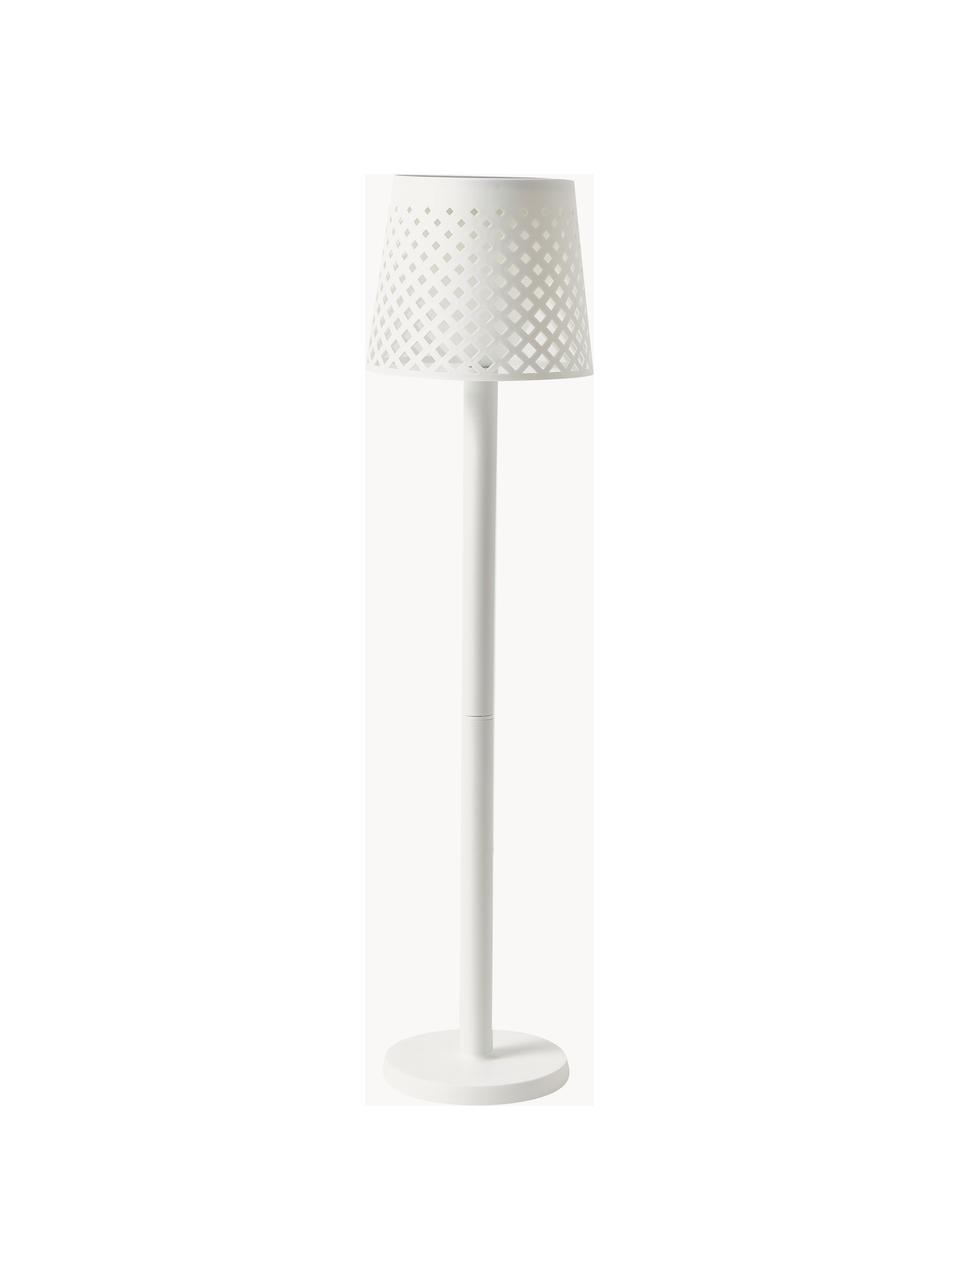 Solar-LED-Lampe Greta 5in1, Kunststoff, Weiß, Ø 16 x H 64 cm